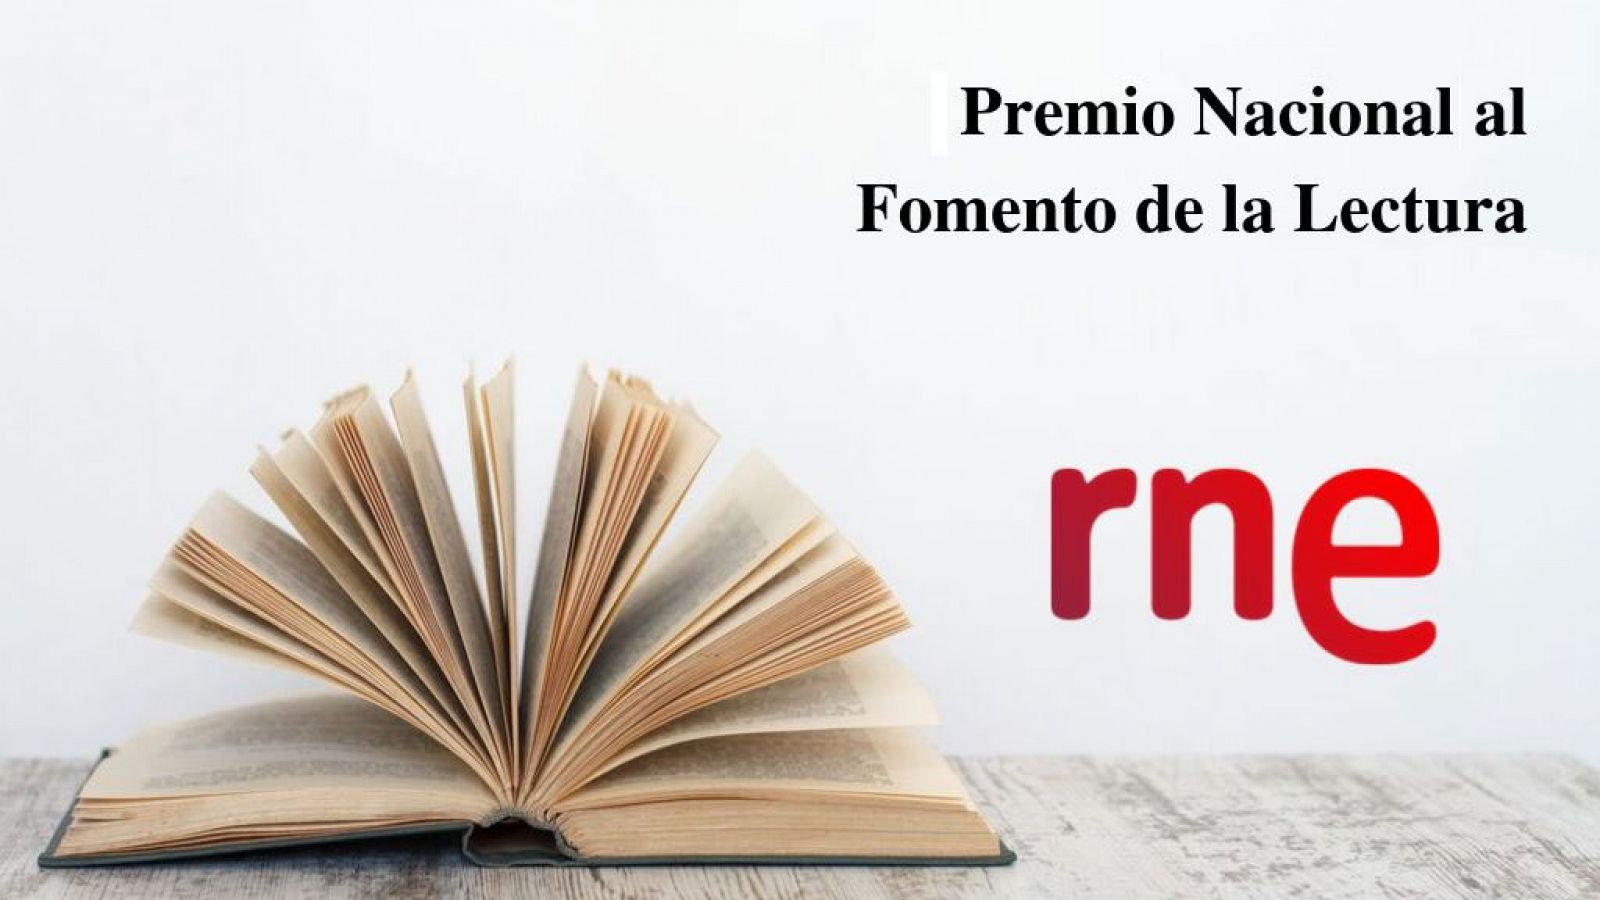 RNE, Premio Nacional al Fomento de la Lectura 2019.